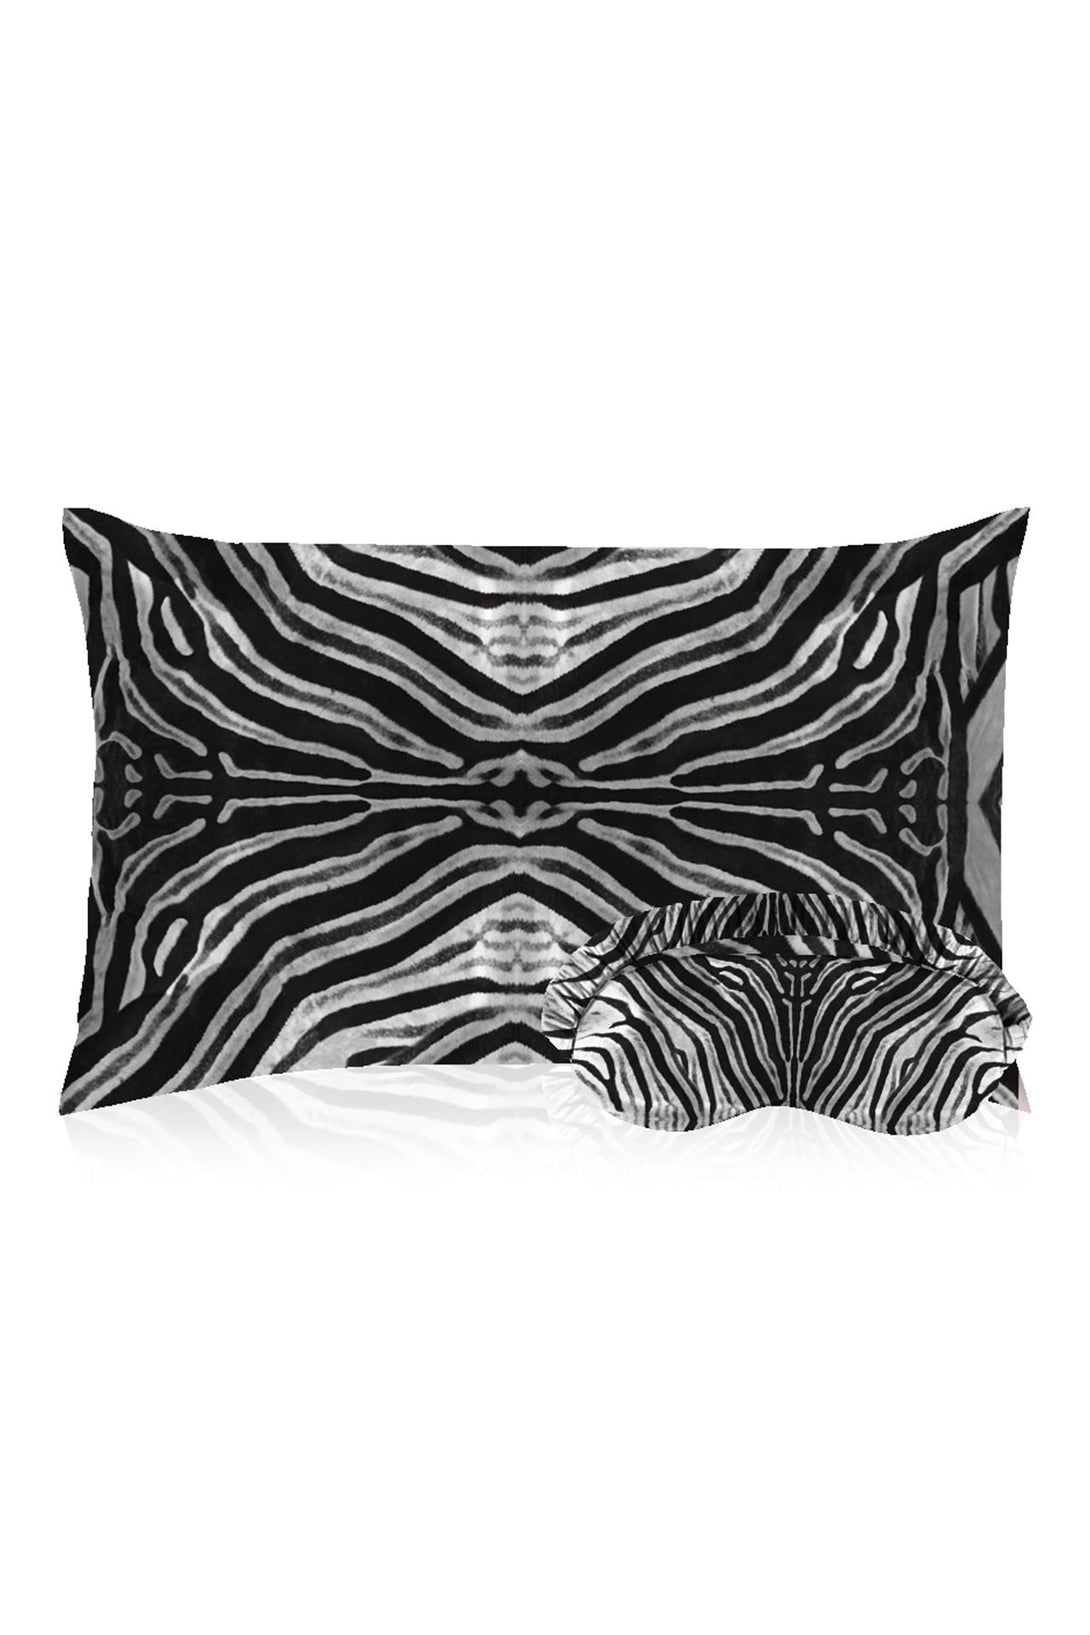 "best decorative pillows" "luxury decorative pillows" "Shahida Parides" "zebra pillow" 